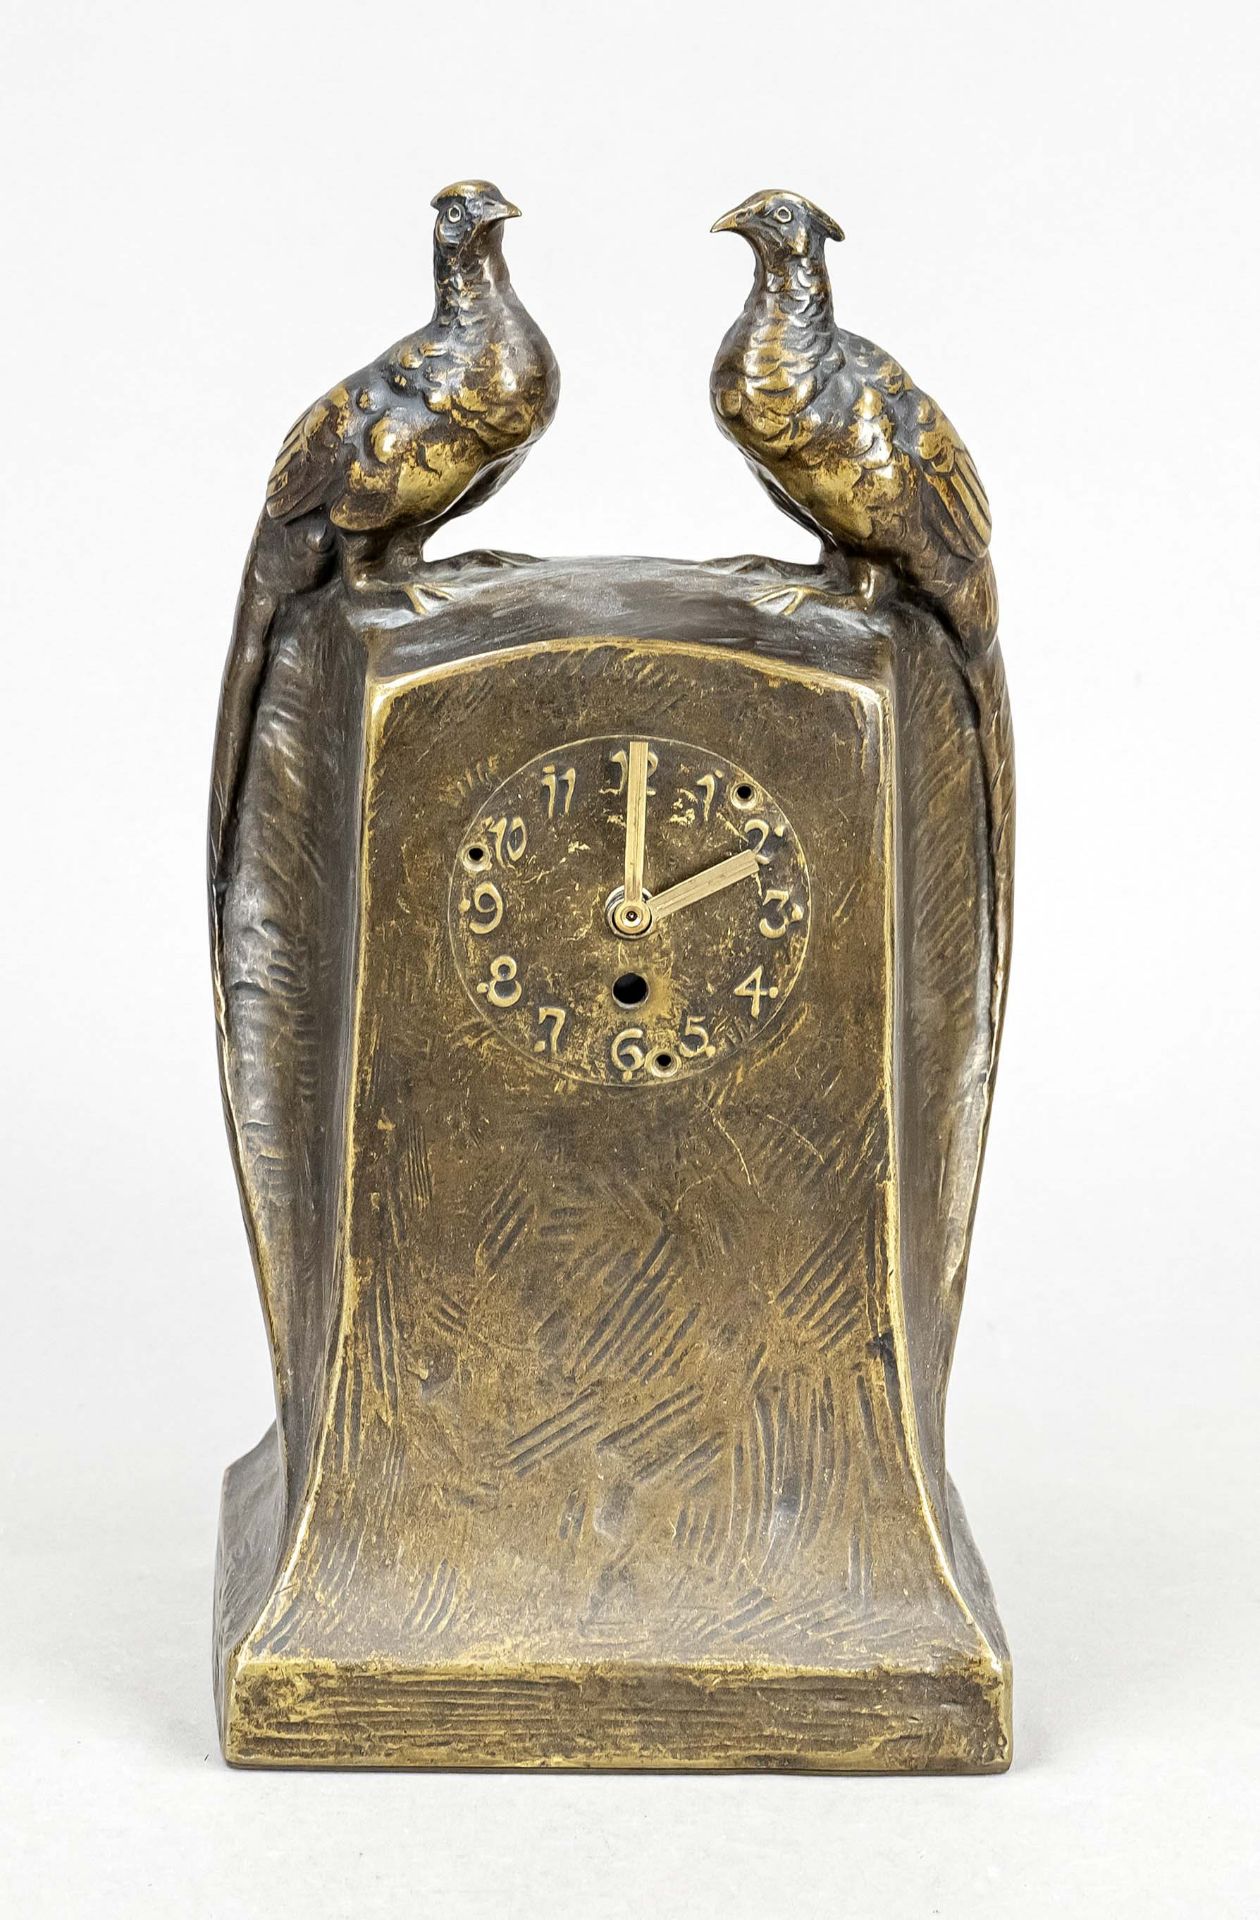 Bronze Art Nouveau table clock F.Cornik, 2 pheasants on the base, dial with raised Arabic